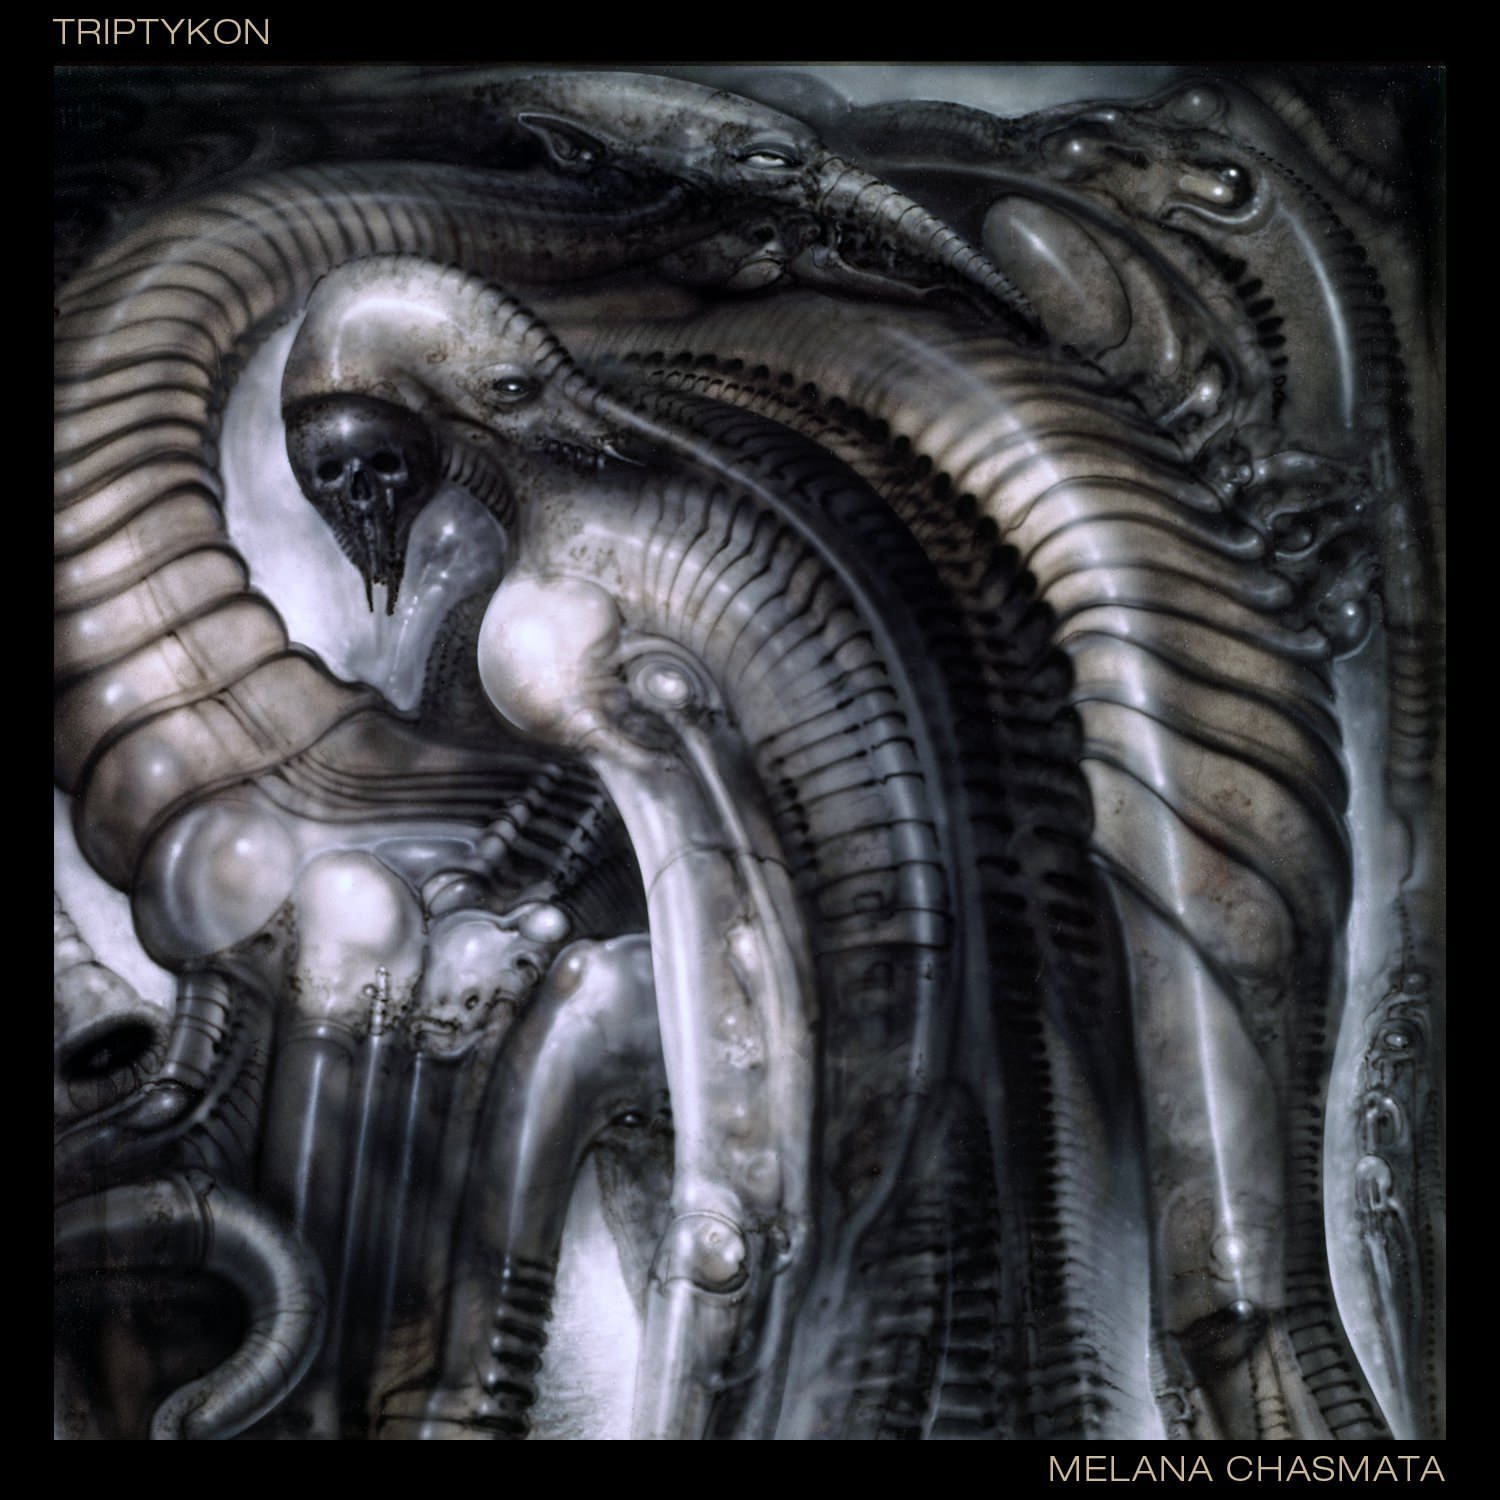 Album Review: Triptykon - Melana Chasmata